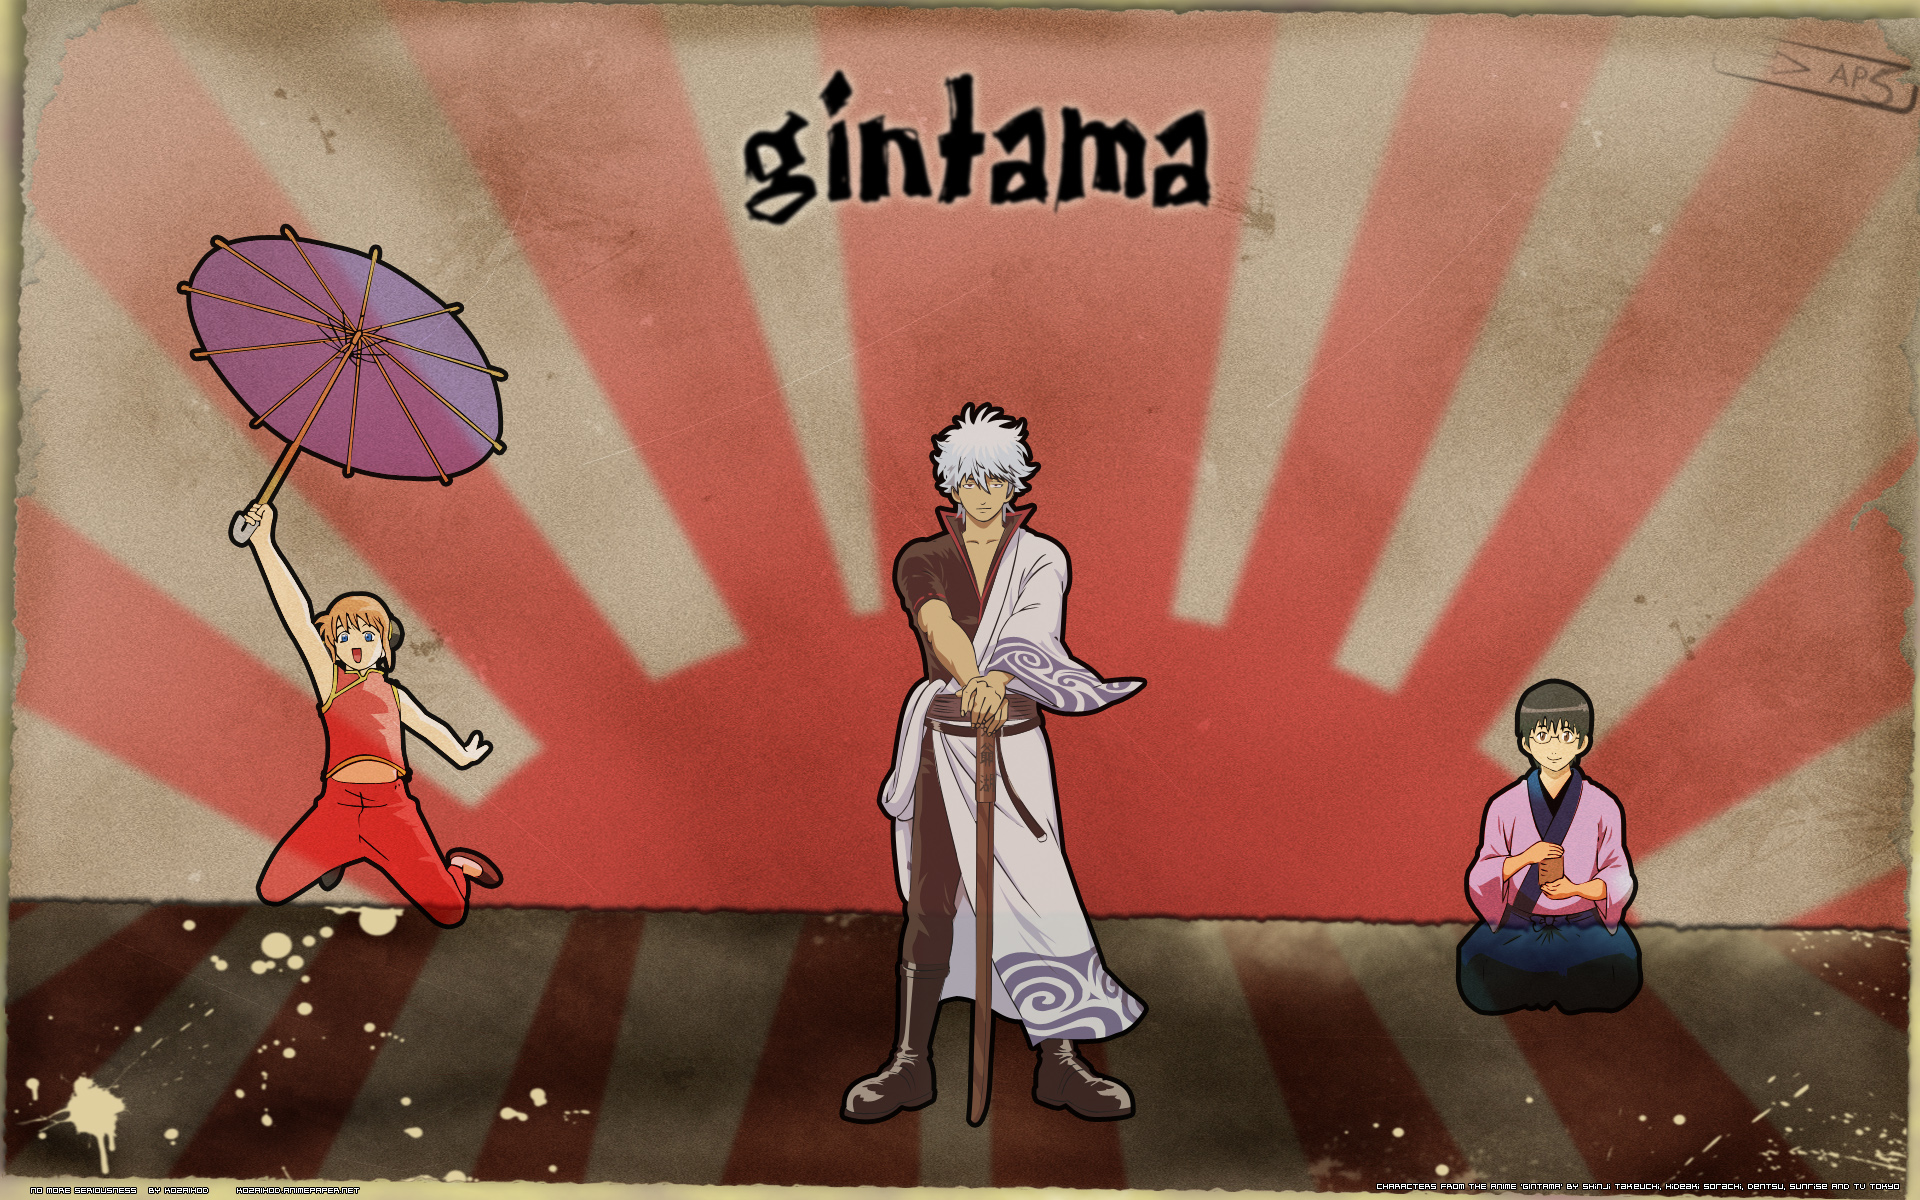 Gintama - desktop wallpaper